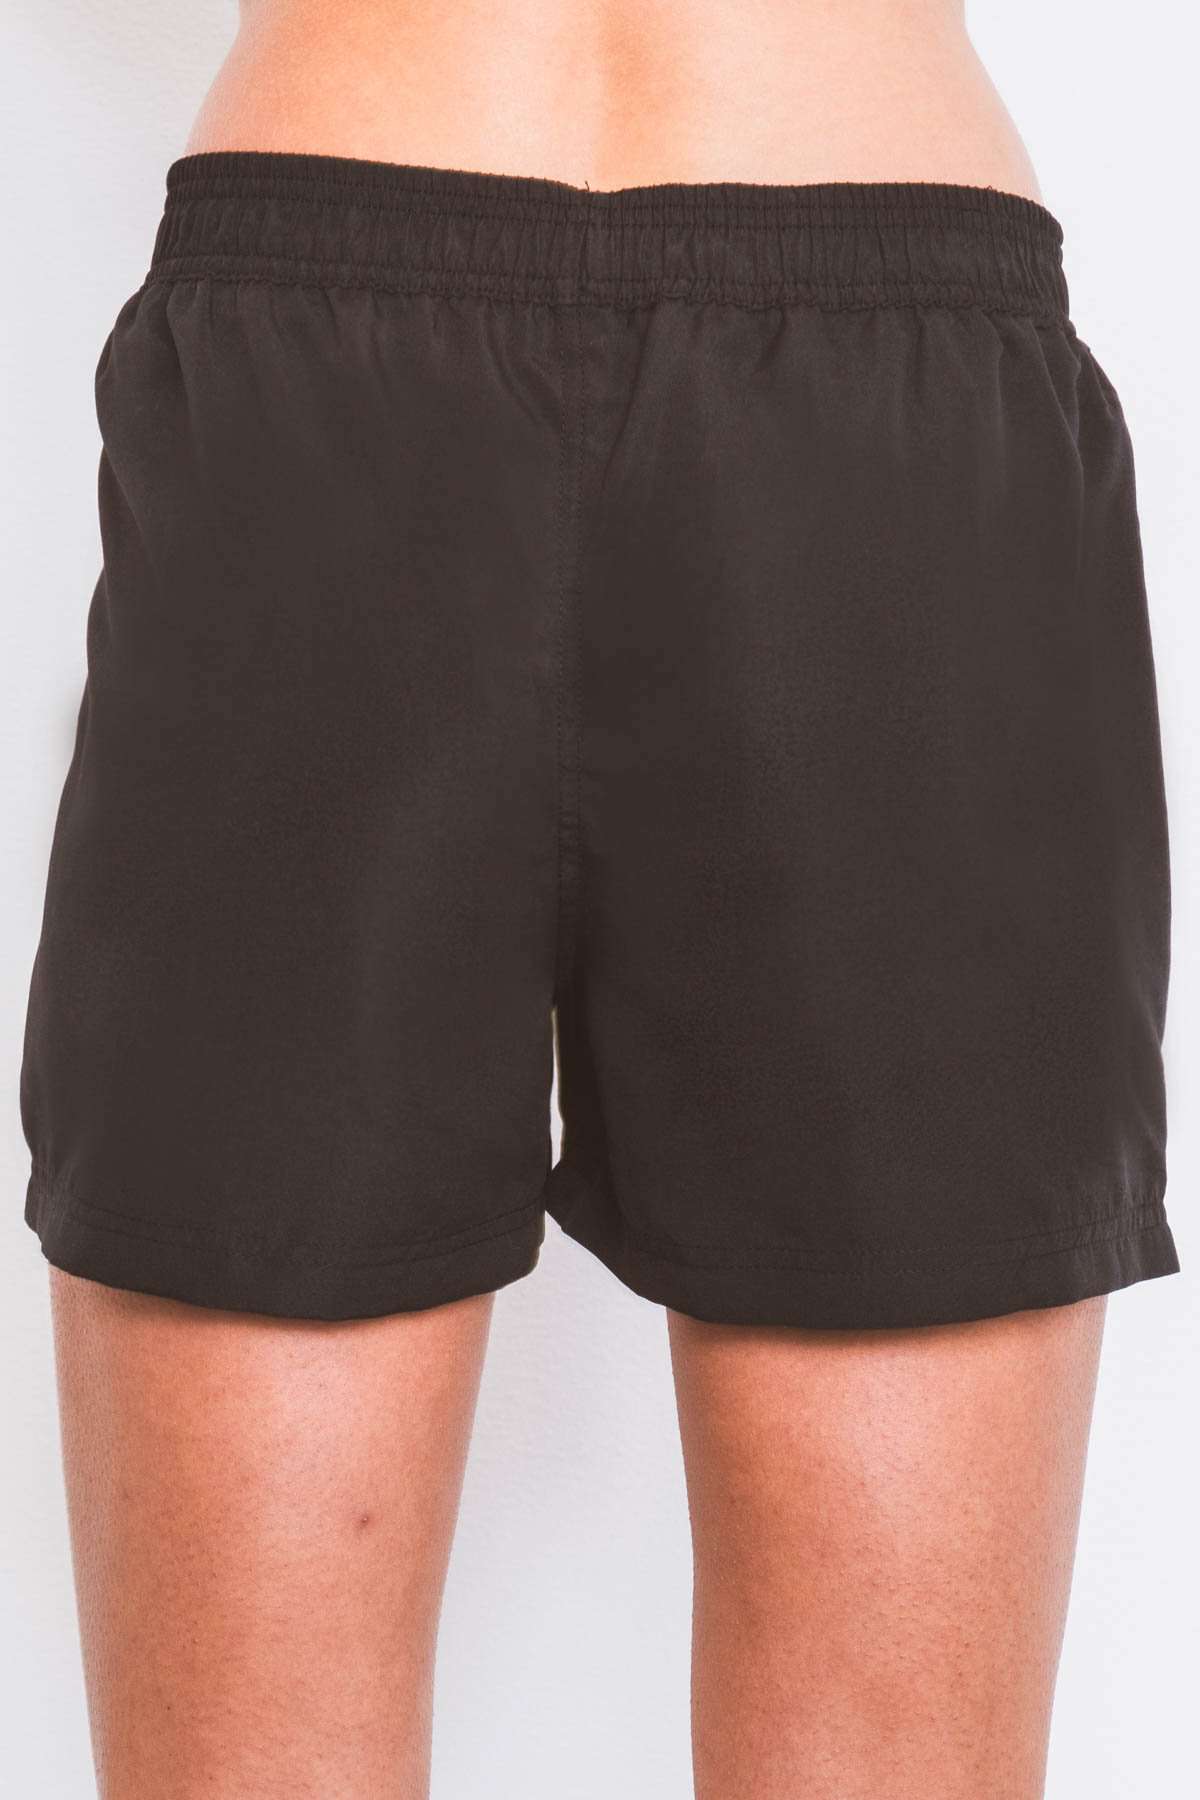 Coega - Ladies Board Shorts